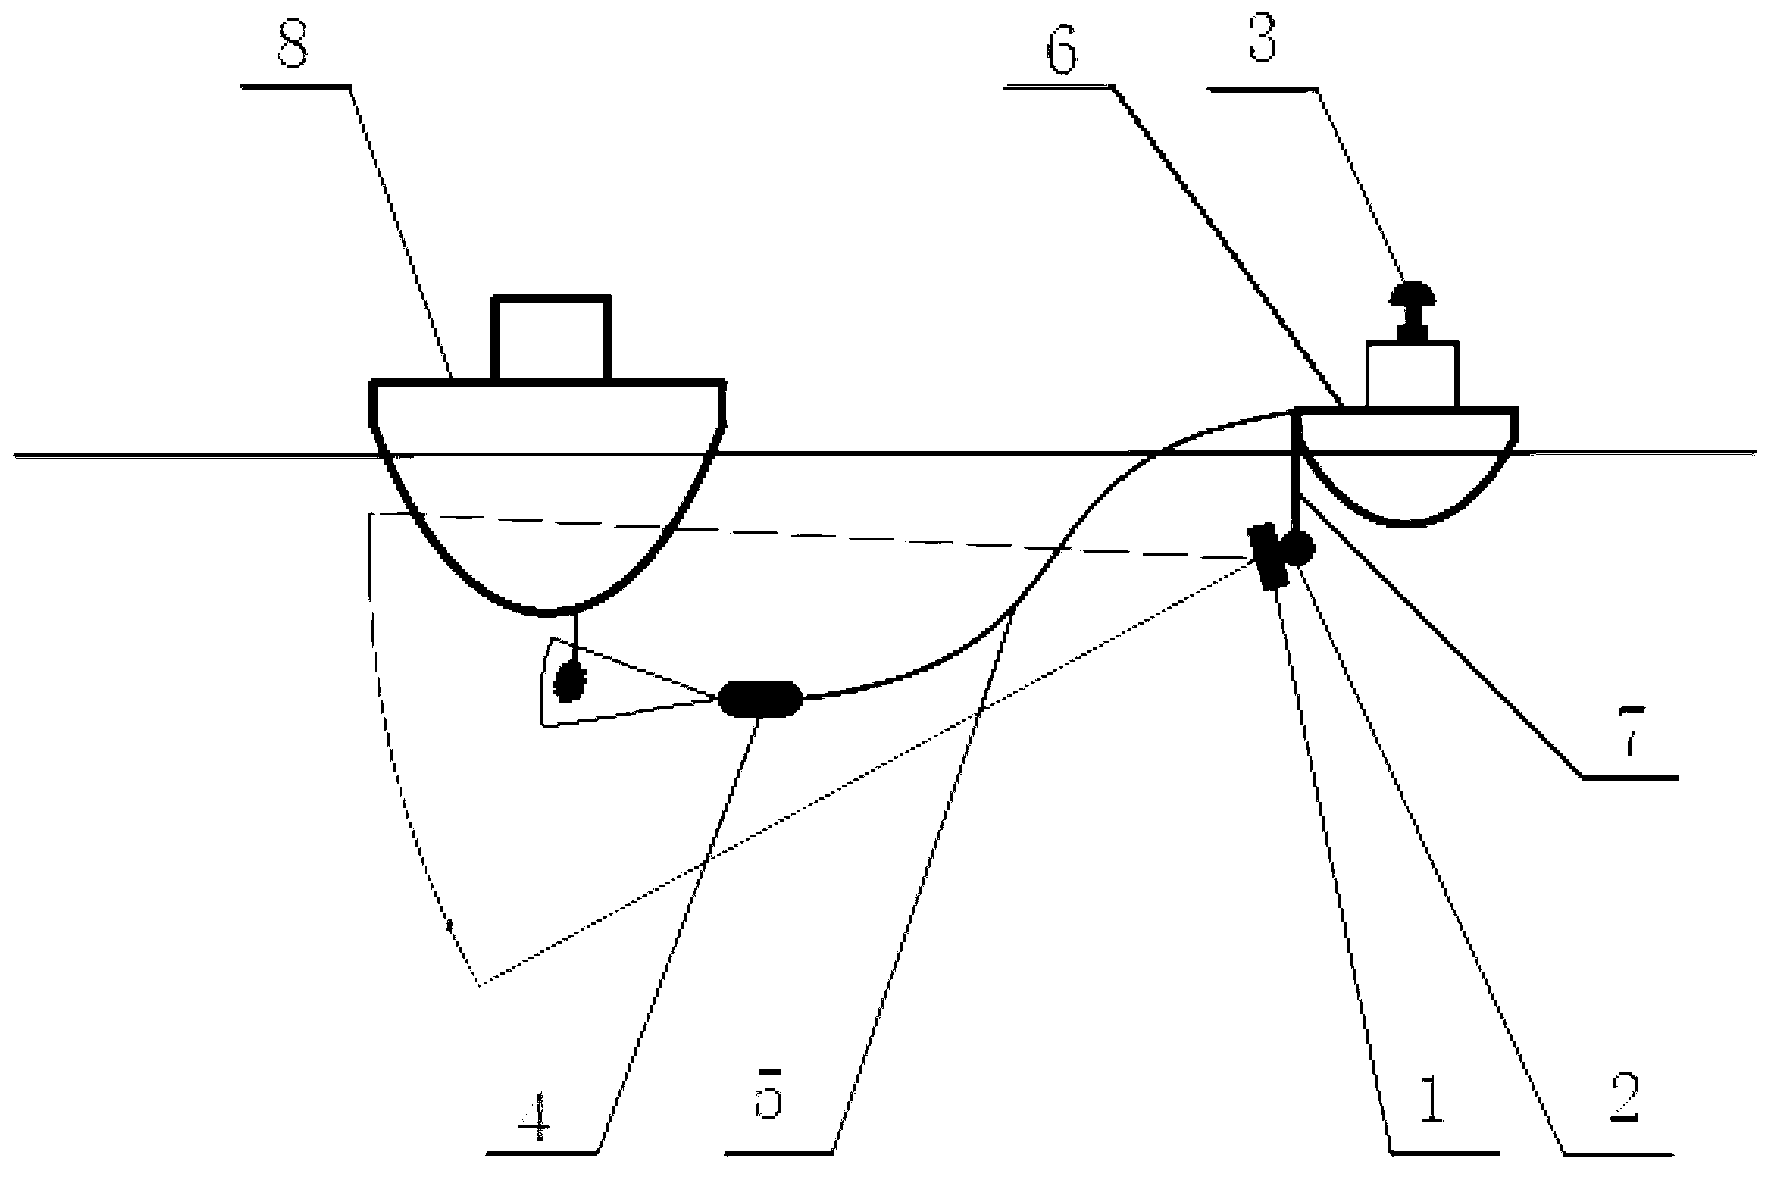 Ship bottom target identification method and system